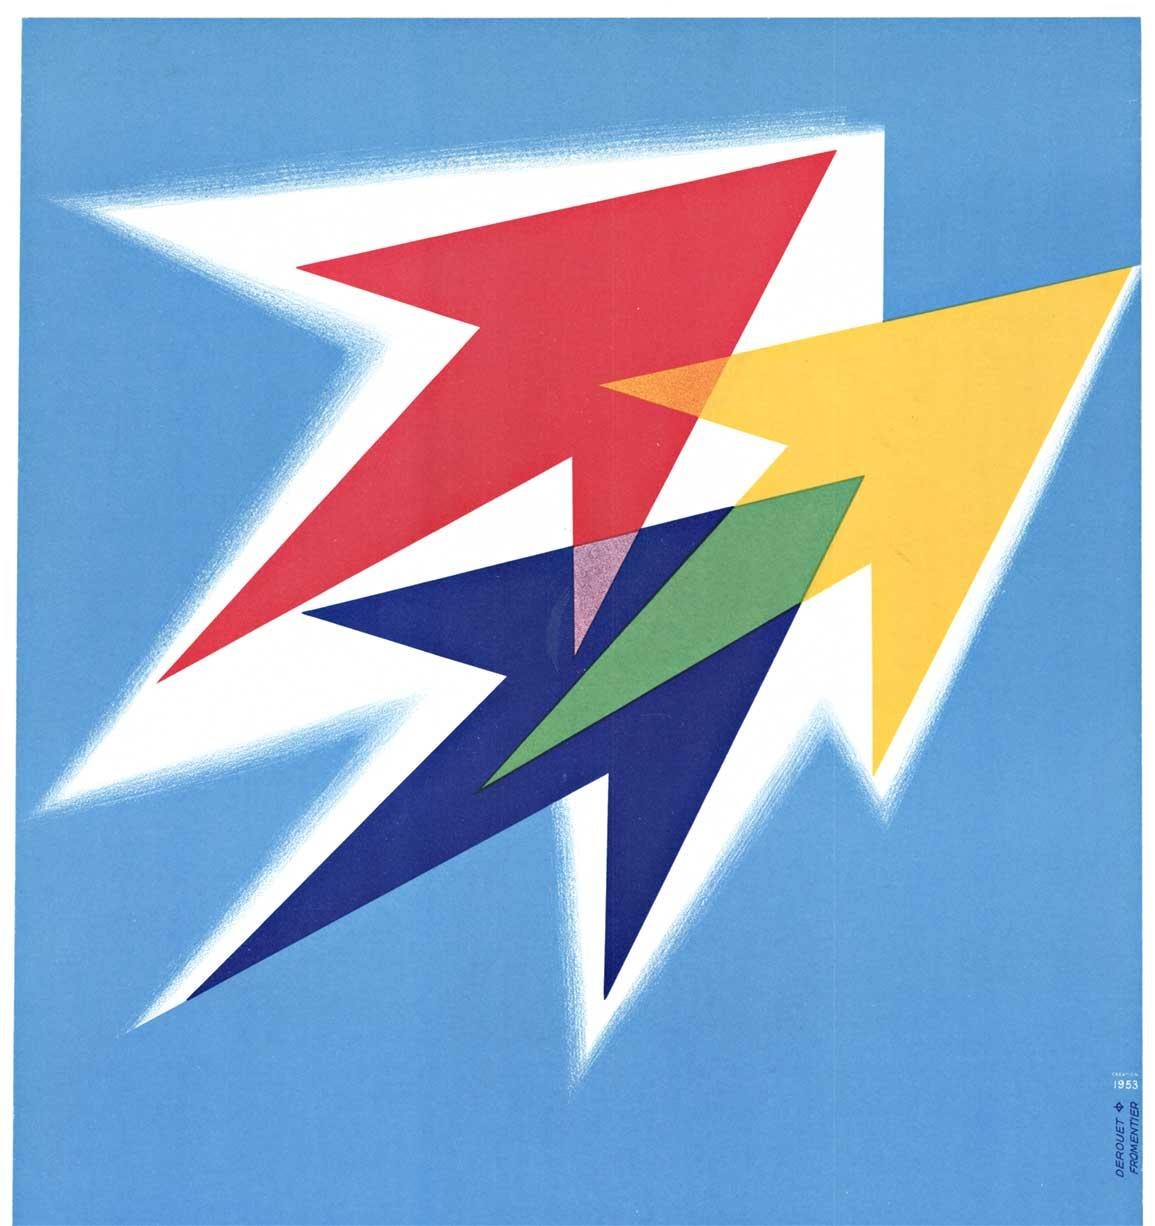 Original Cinquantenaire Aeronautique  Bourget,  vintage air show poster - Abstract Geometric Print by Edgard Derouet